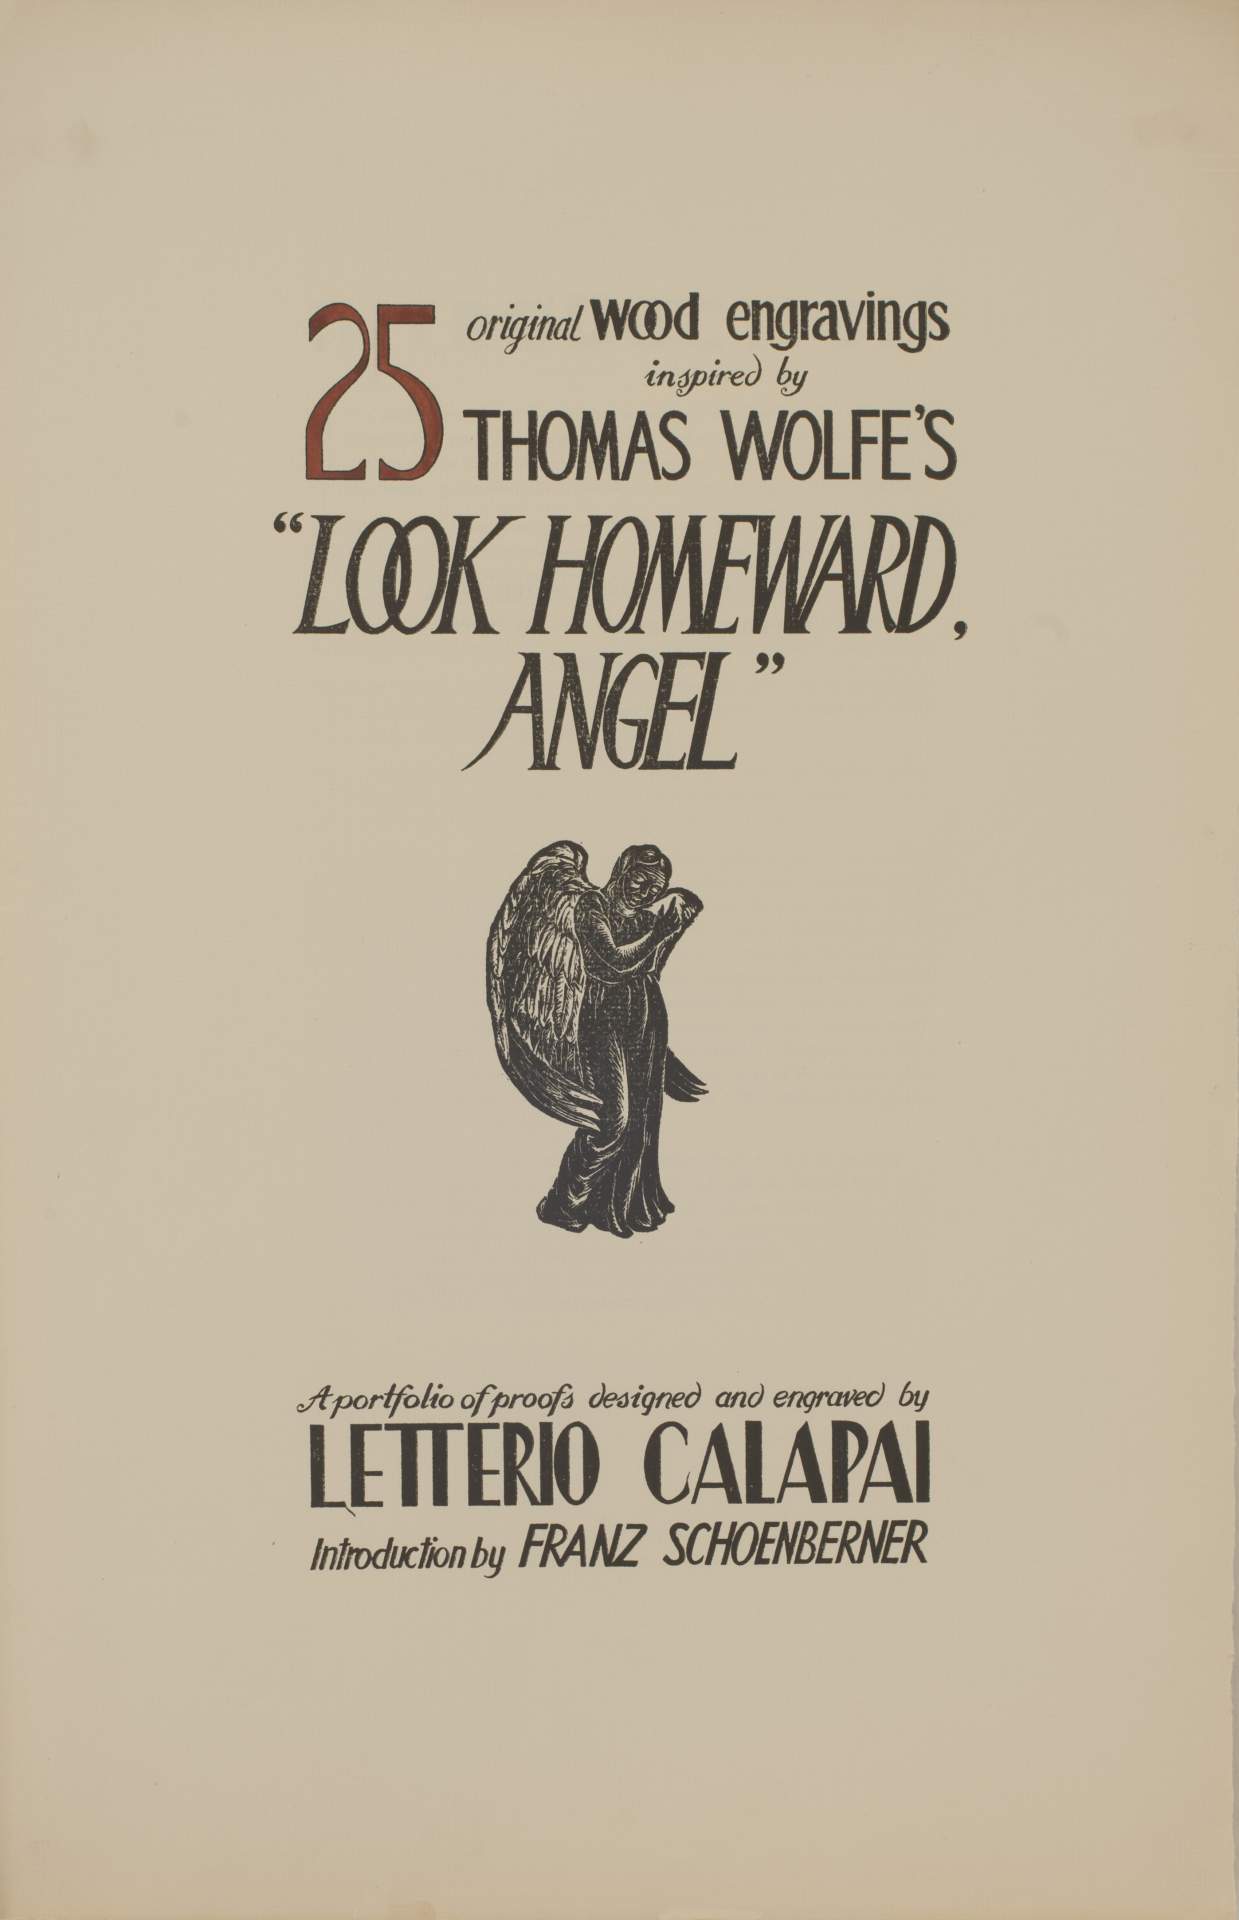 Thomas Wolfe, Look Homeward, Angel (1929), prints by Letterio Calapai (1948)